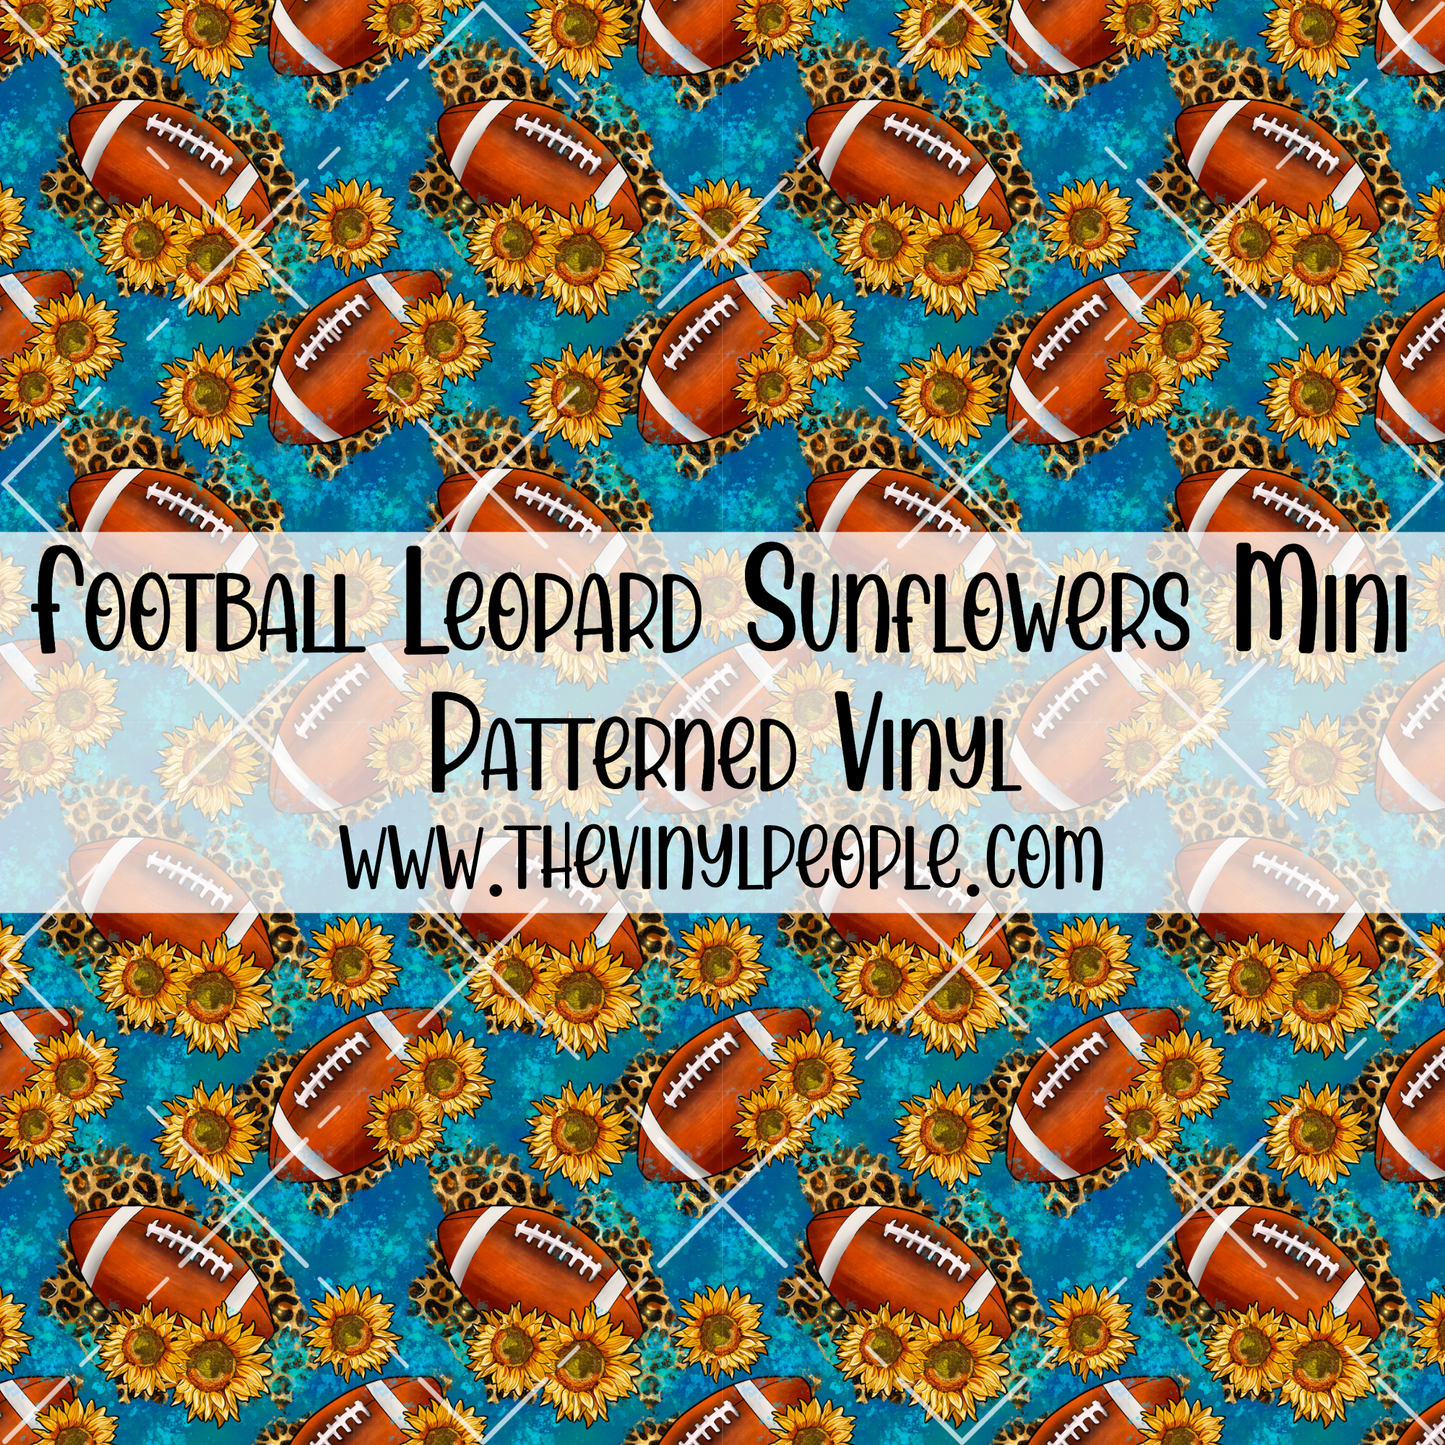 Football Leopard Sunflowers Patterned Vinyl